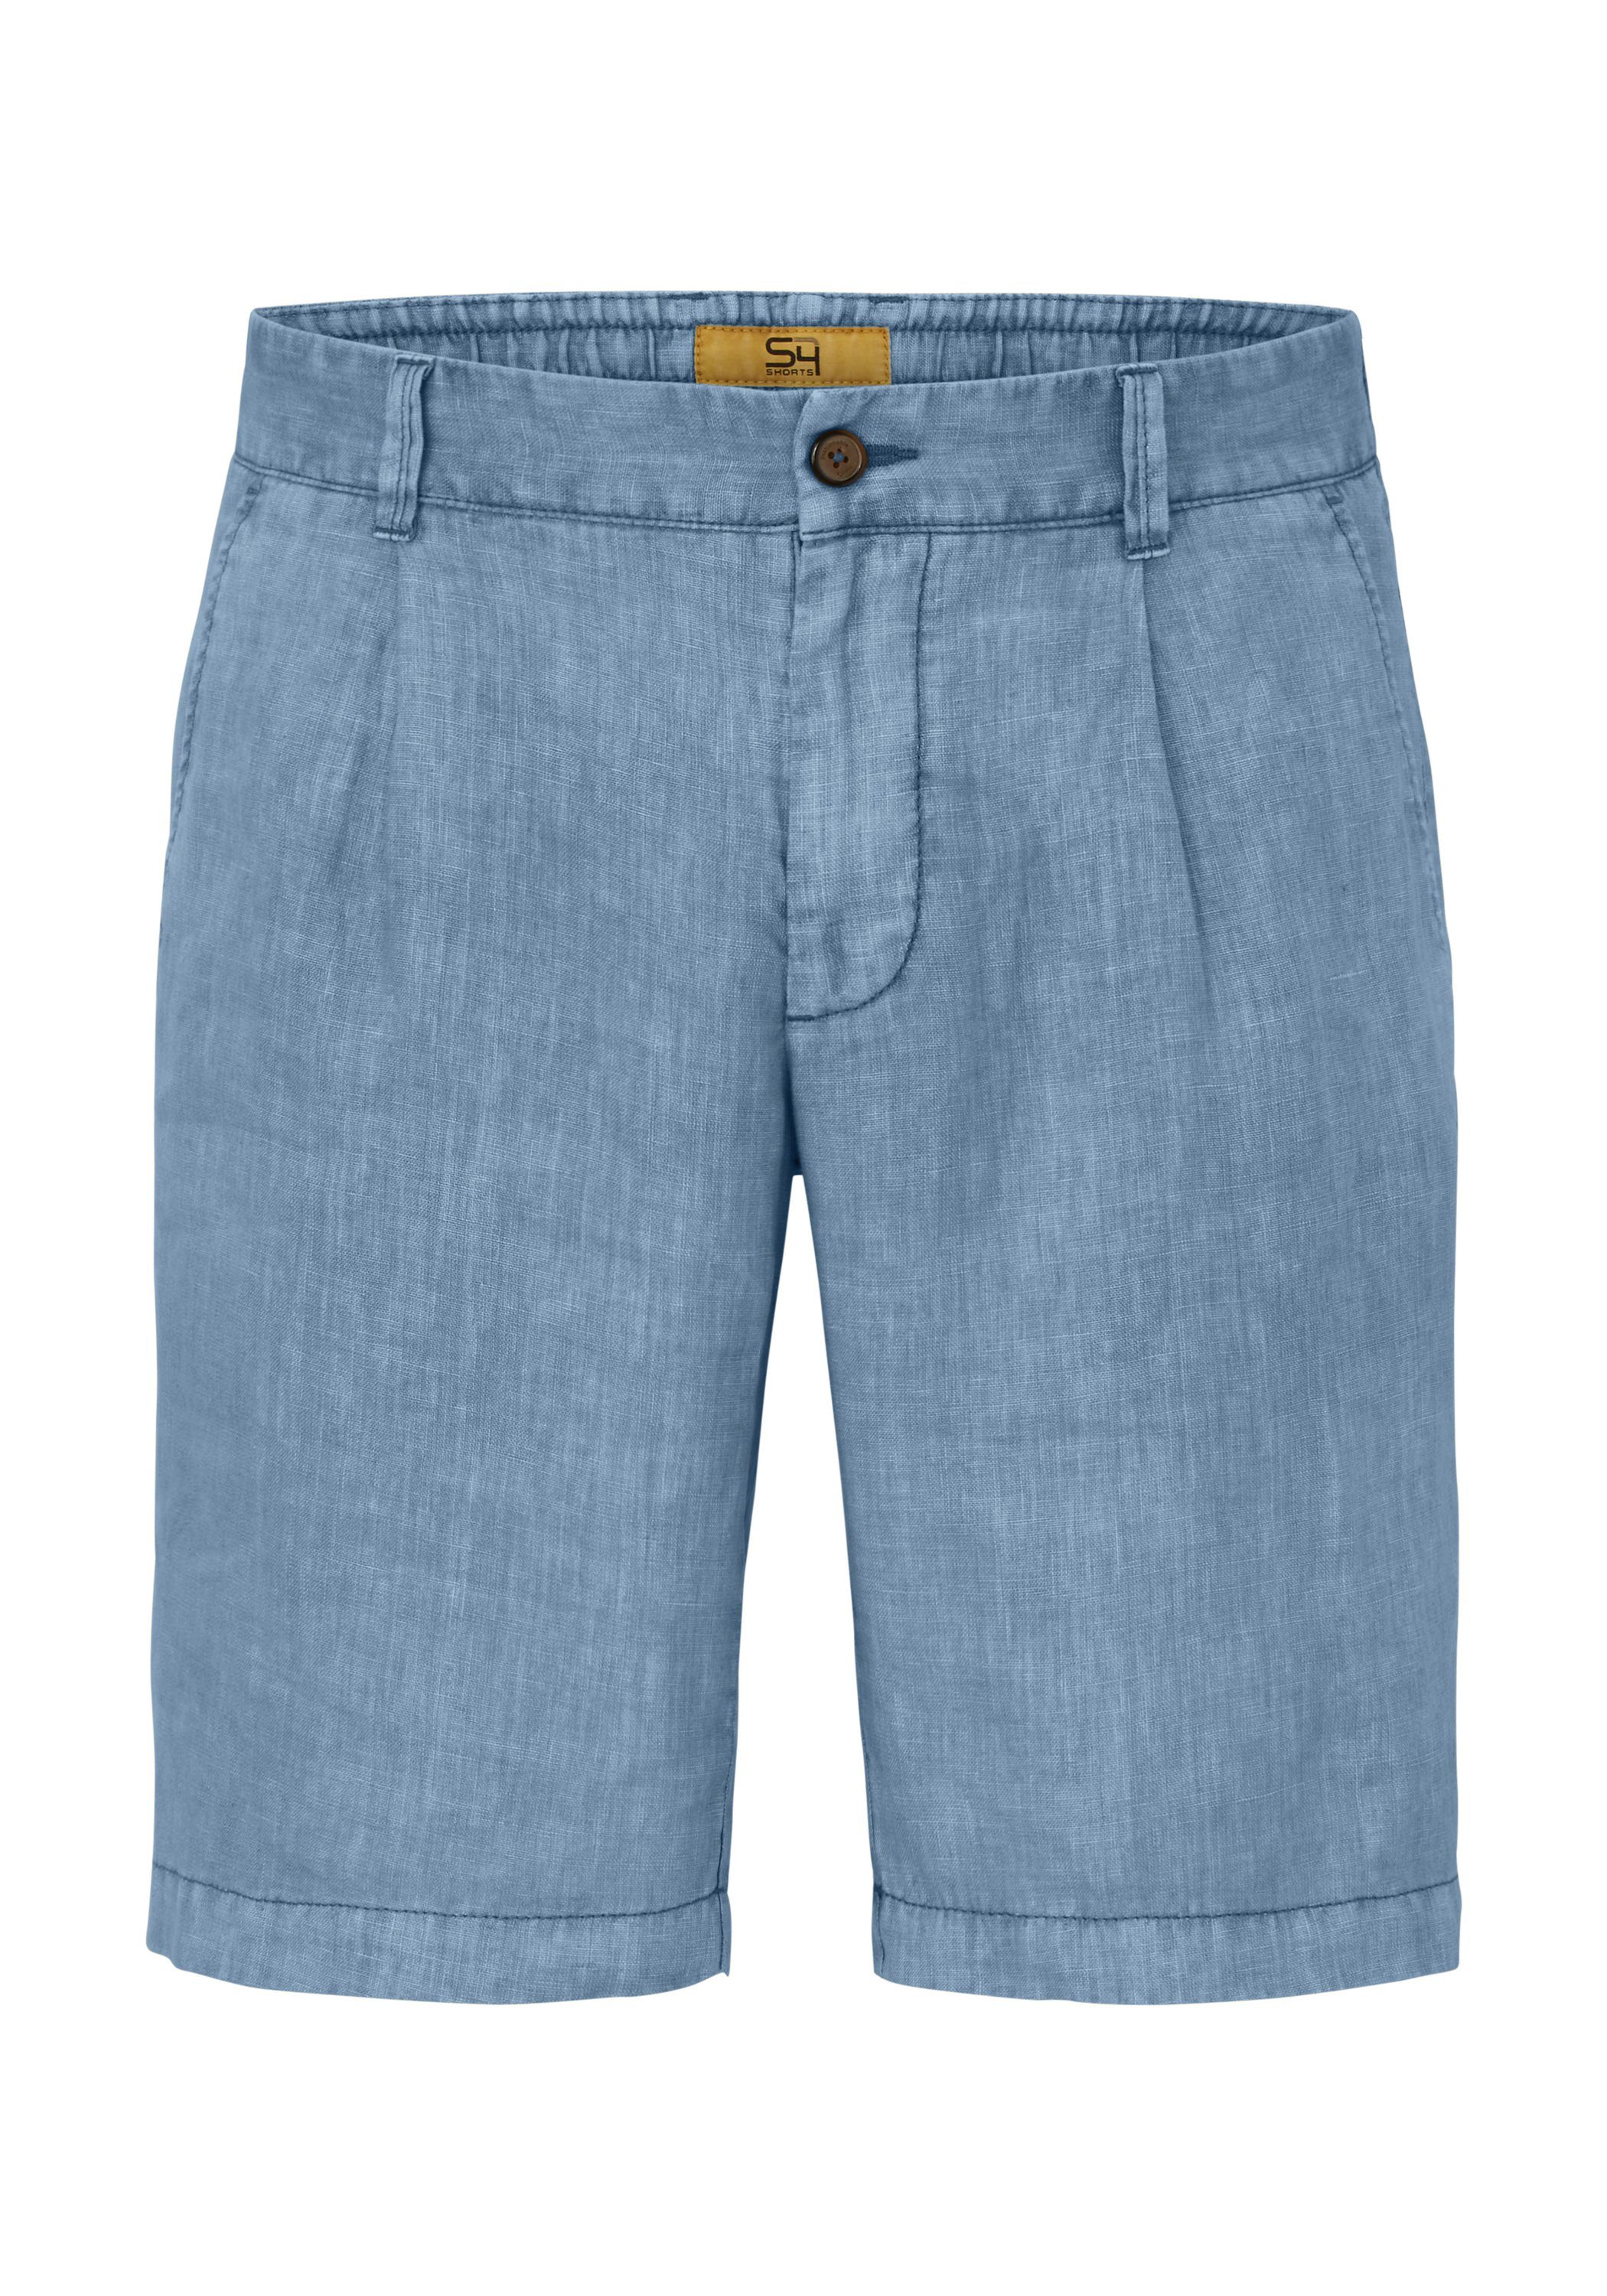 MAUI panoramic aus Fit Leinen blue Bermudas Shorts 2 Jackets Modern Leichte S4